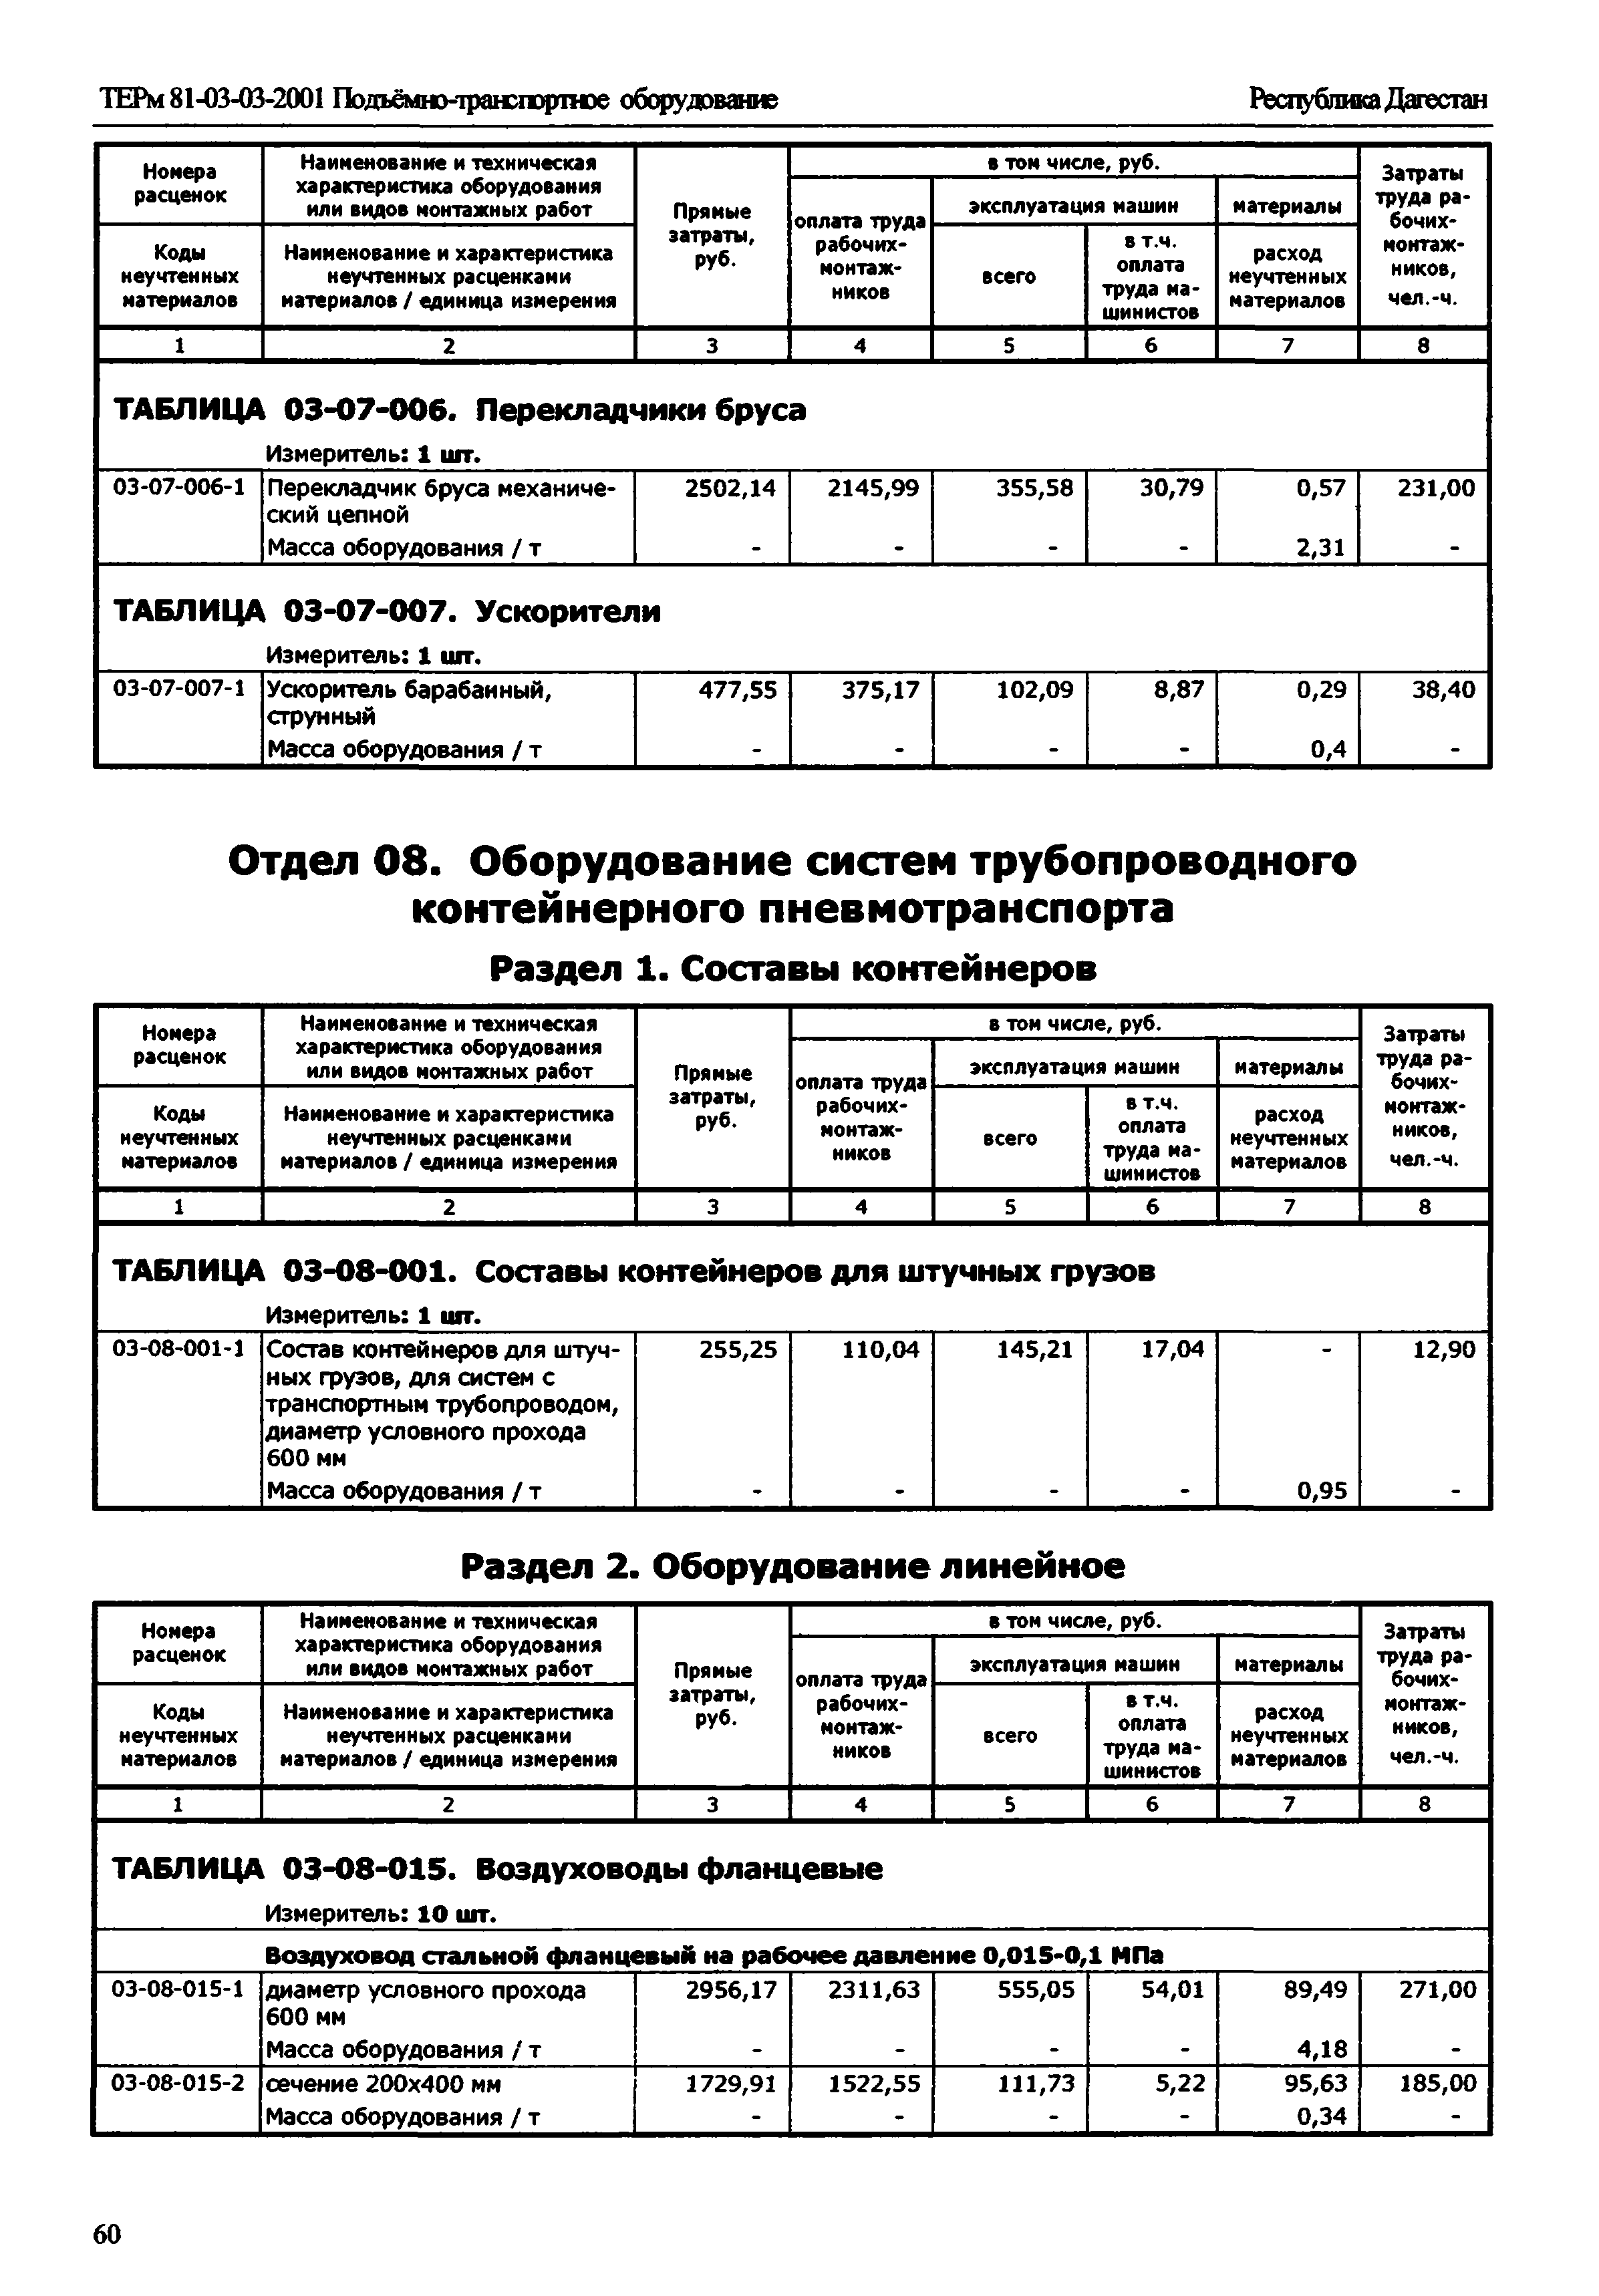 ТЕРм Республика Дагестан 2001-03